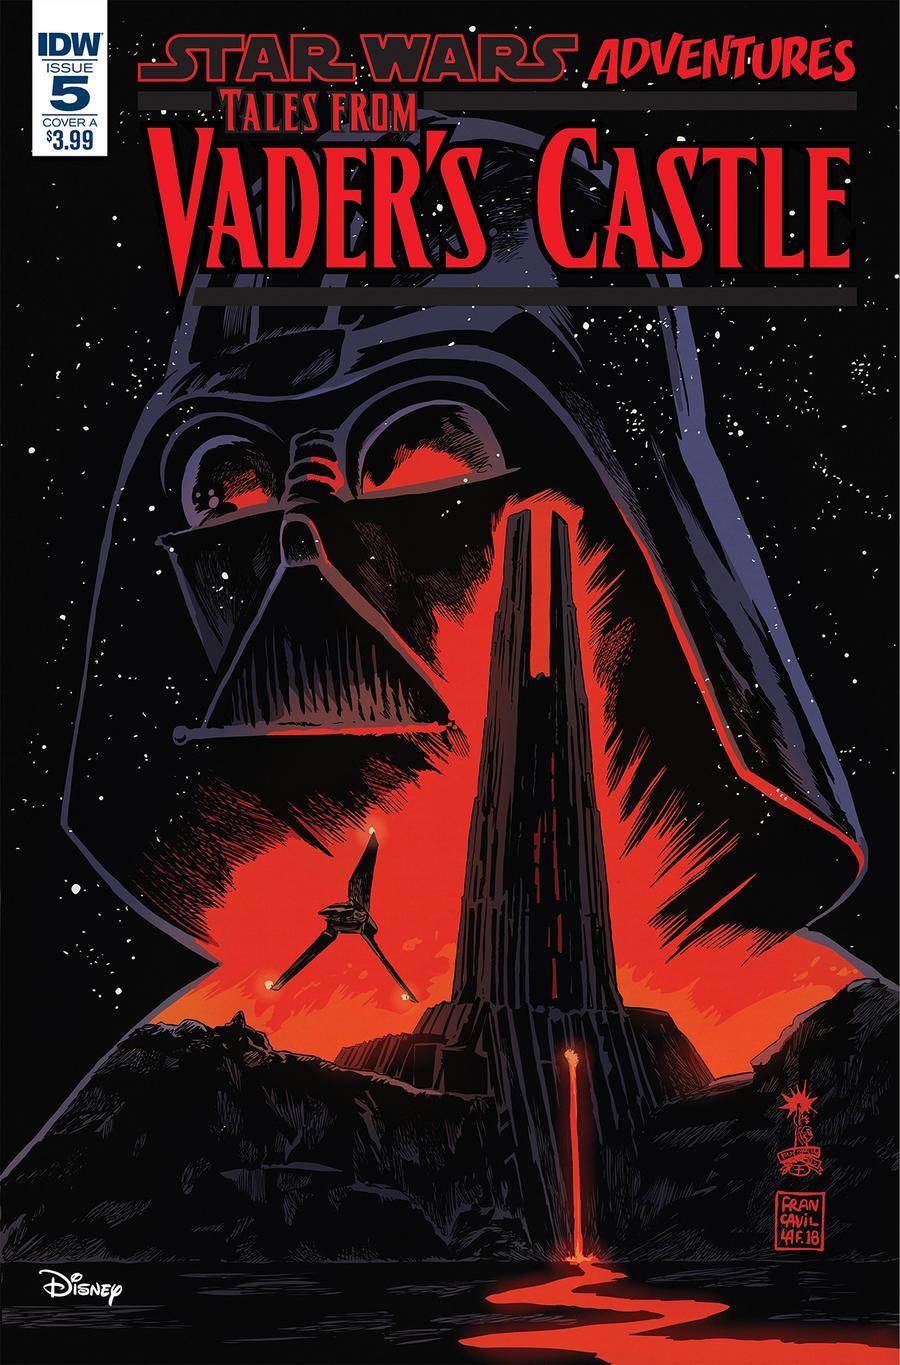 Star Wars Adventures Tales From Vaders Castle Vol. 1 #5